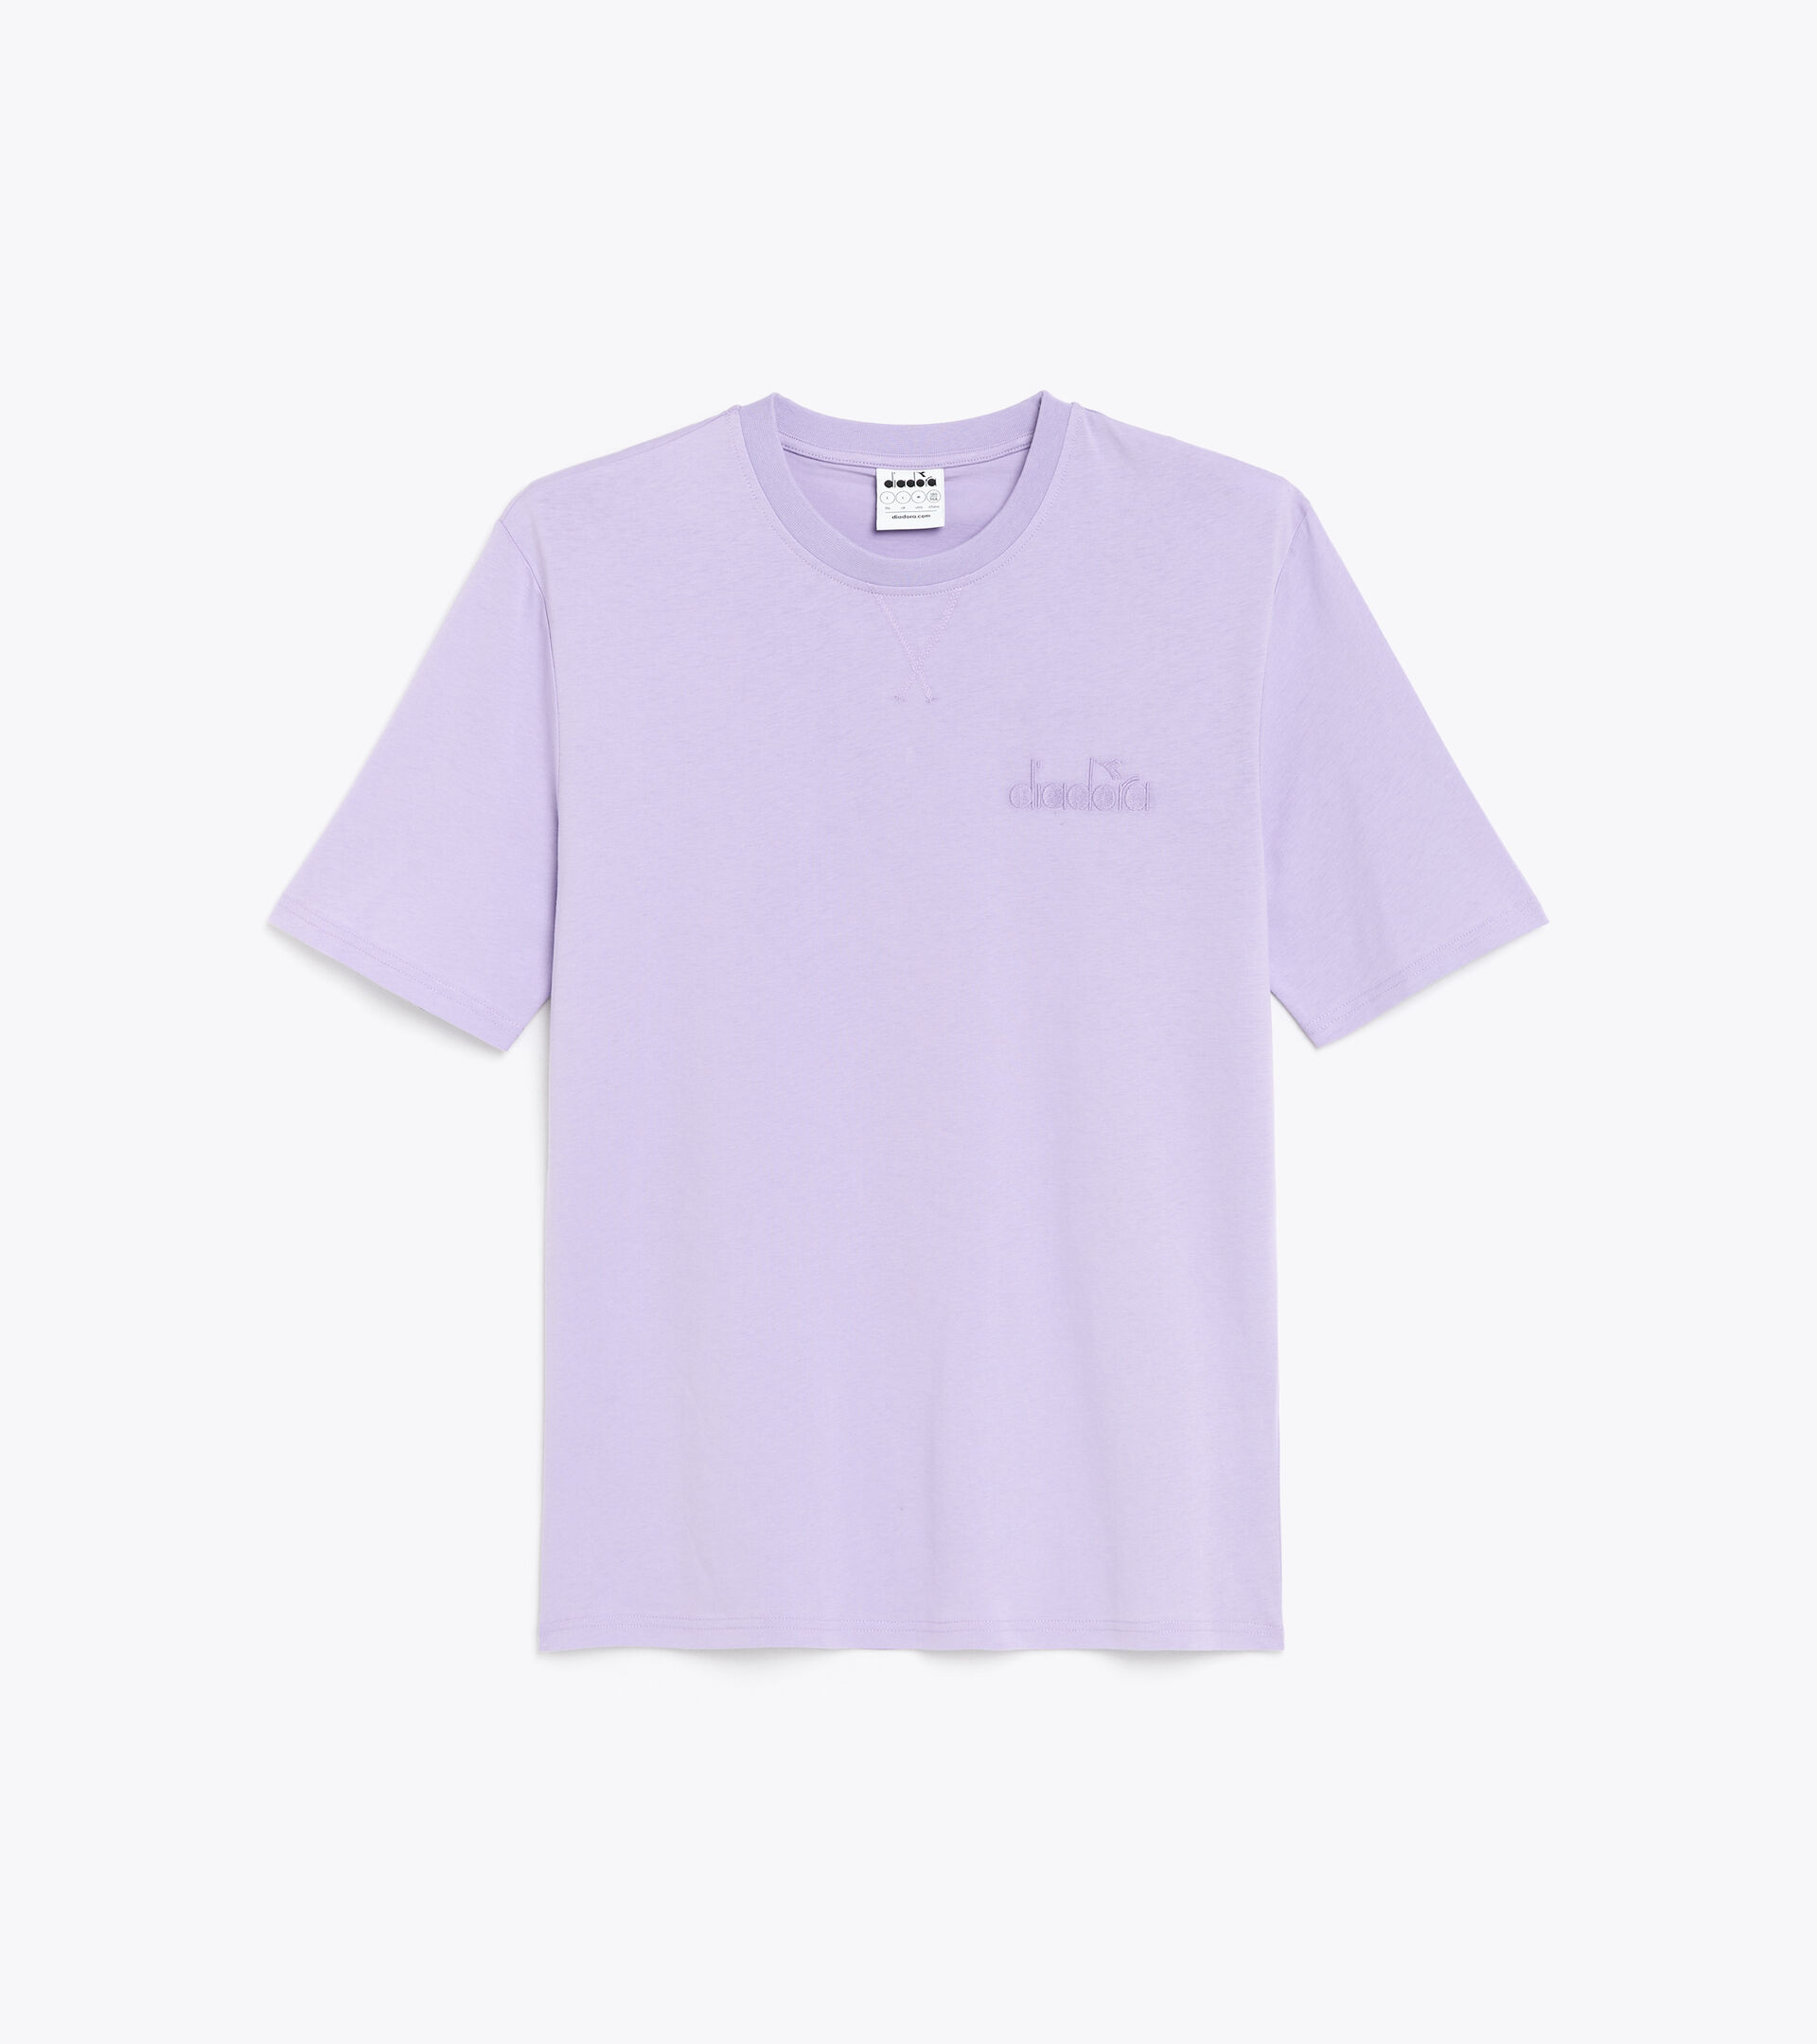 Cotton t-shirt - Gender neutral T-SHIRT SS SPW LOGO PURPLE ROSE - Diadora